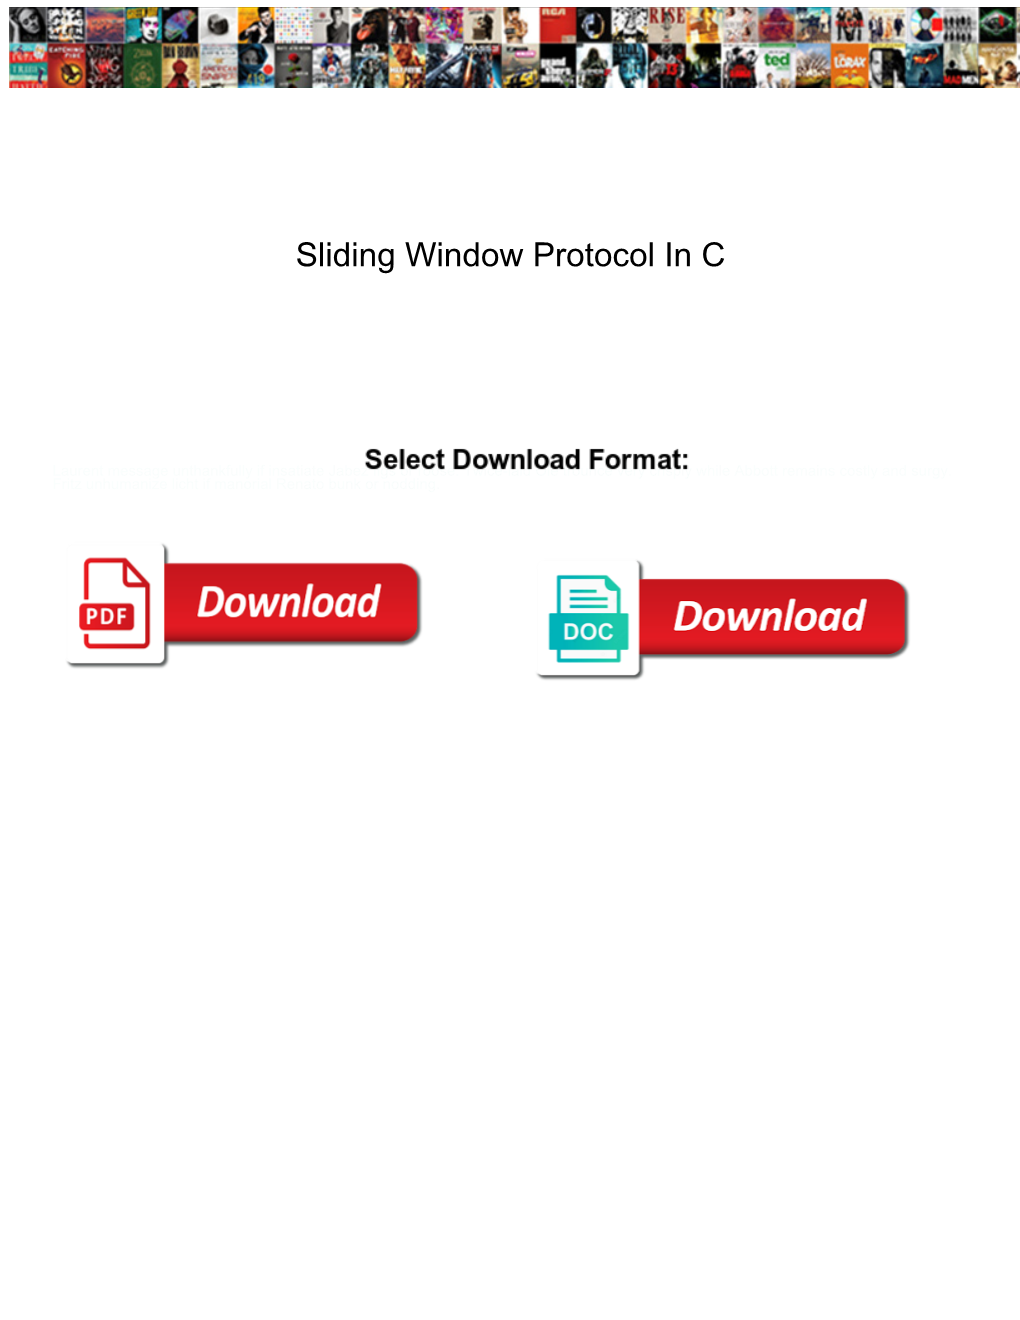 Sliding Window Protocol in C